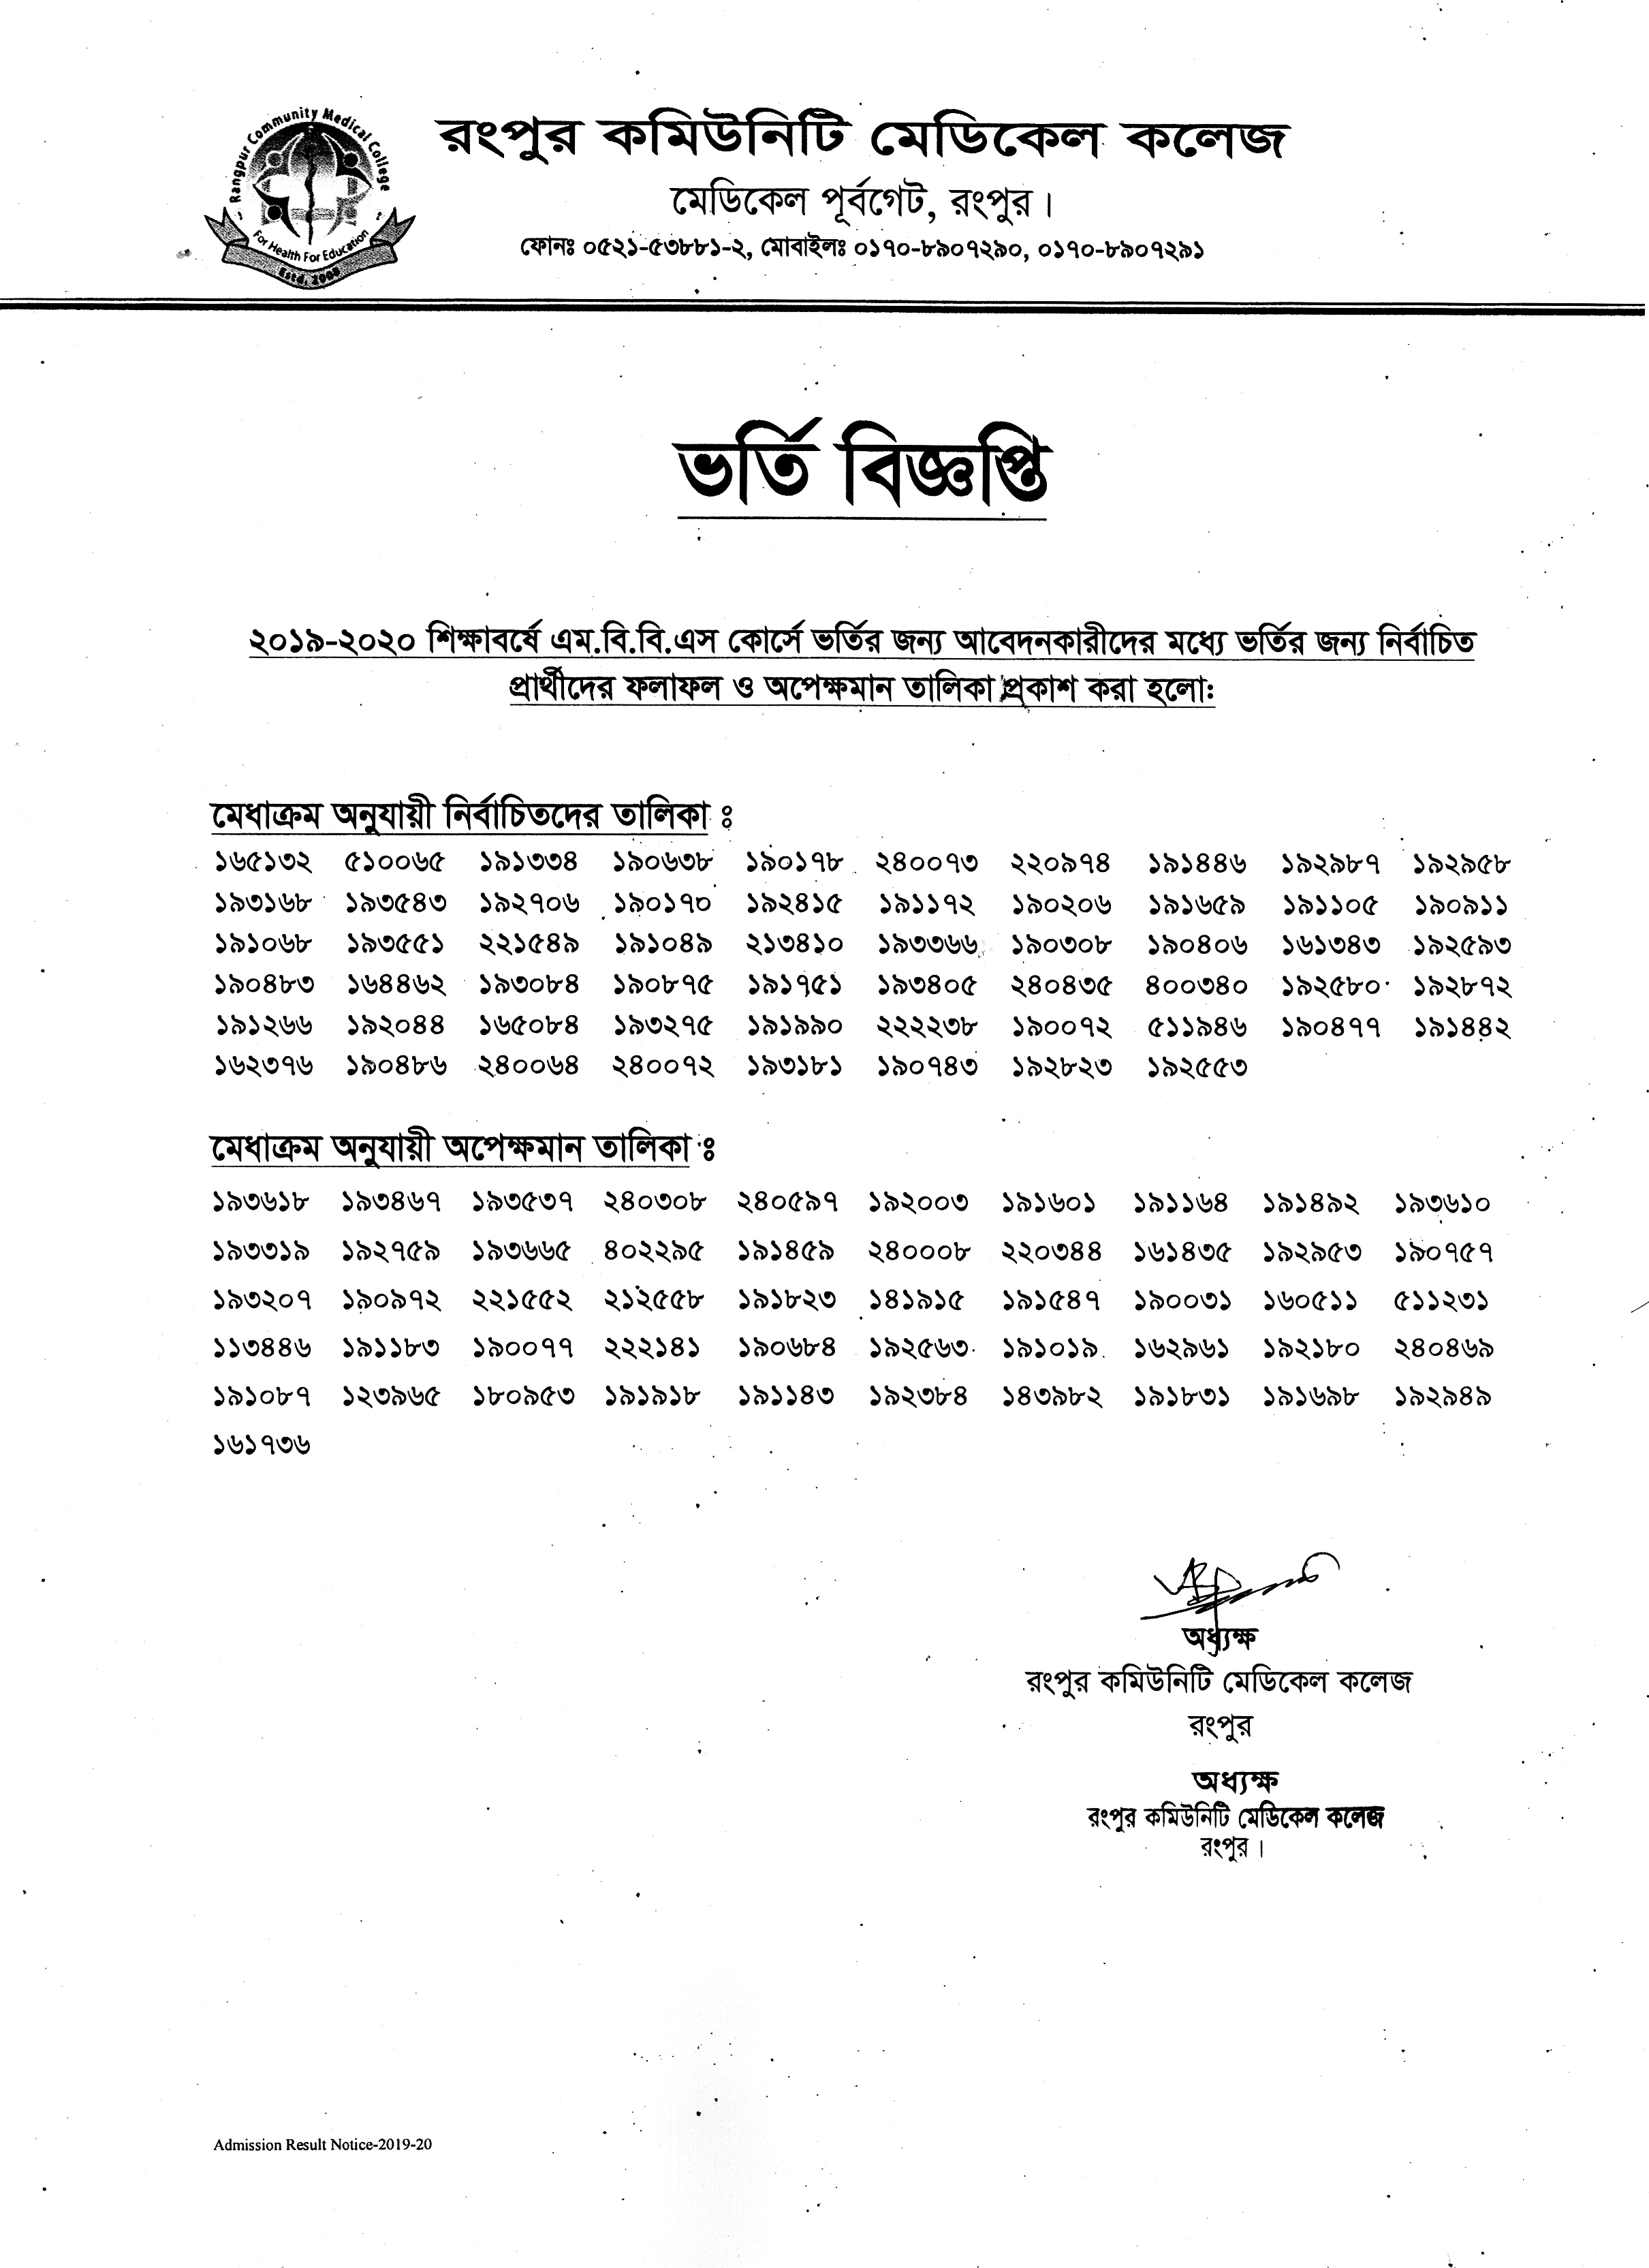 MBBS admission test result of Rangpur Community Medical College (RCMC)